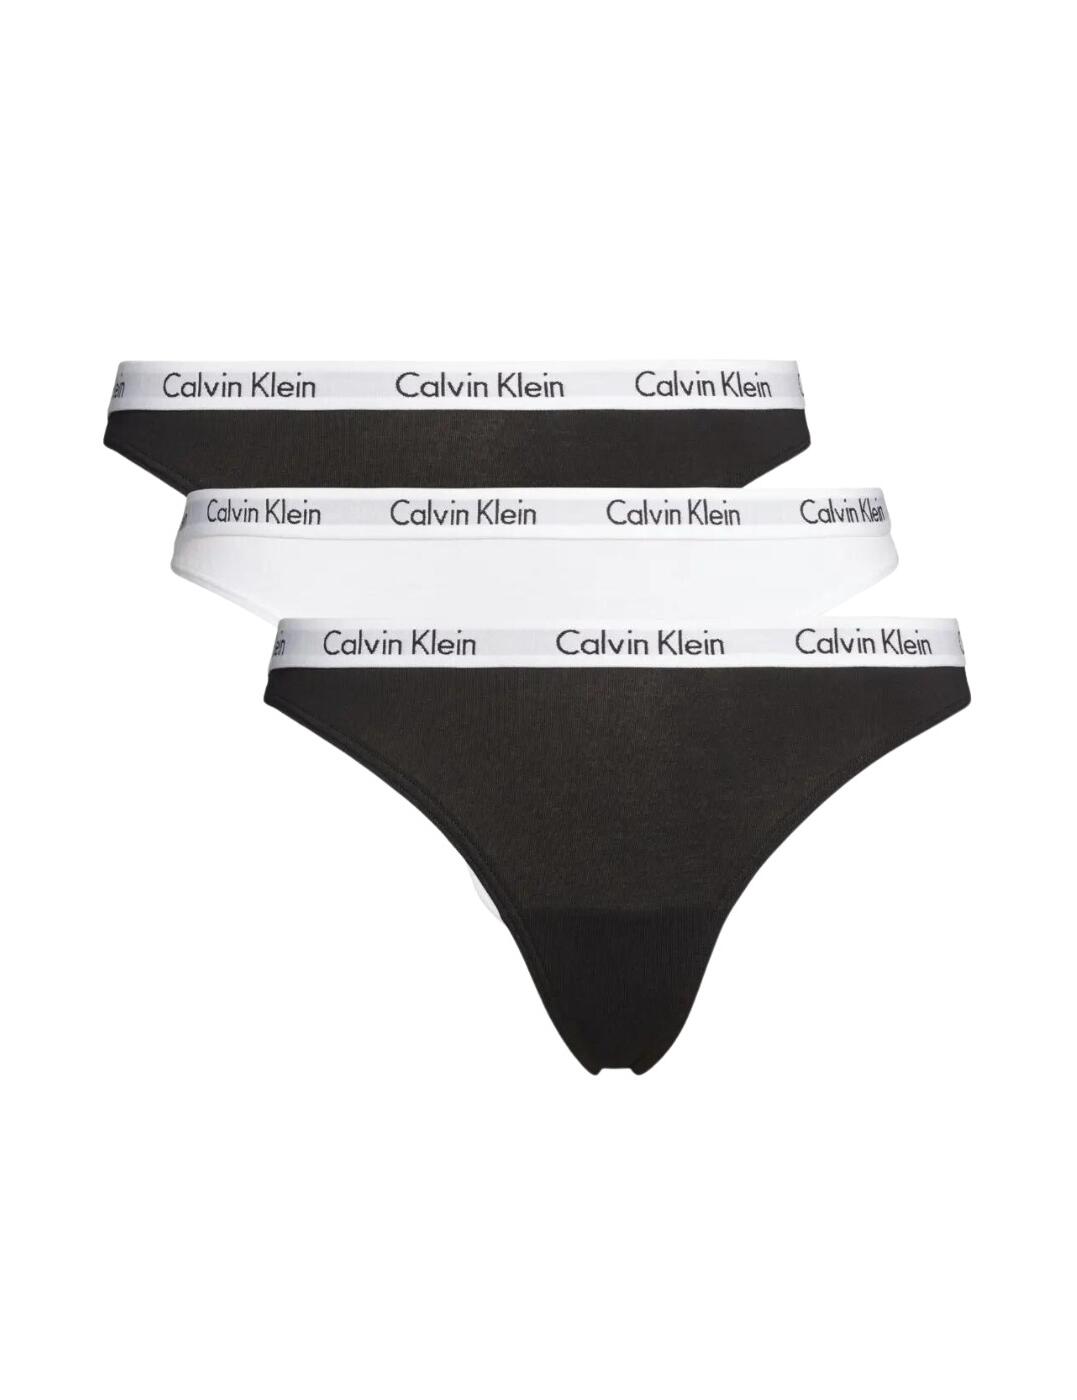 Calvin Klein Carousel Thong 3 Pack in Black/White/Black